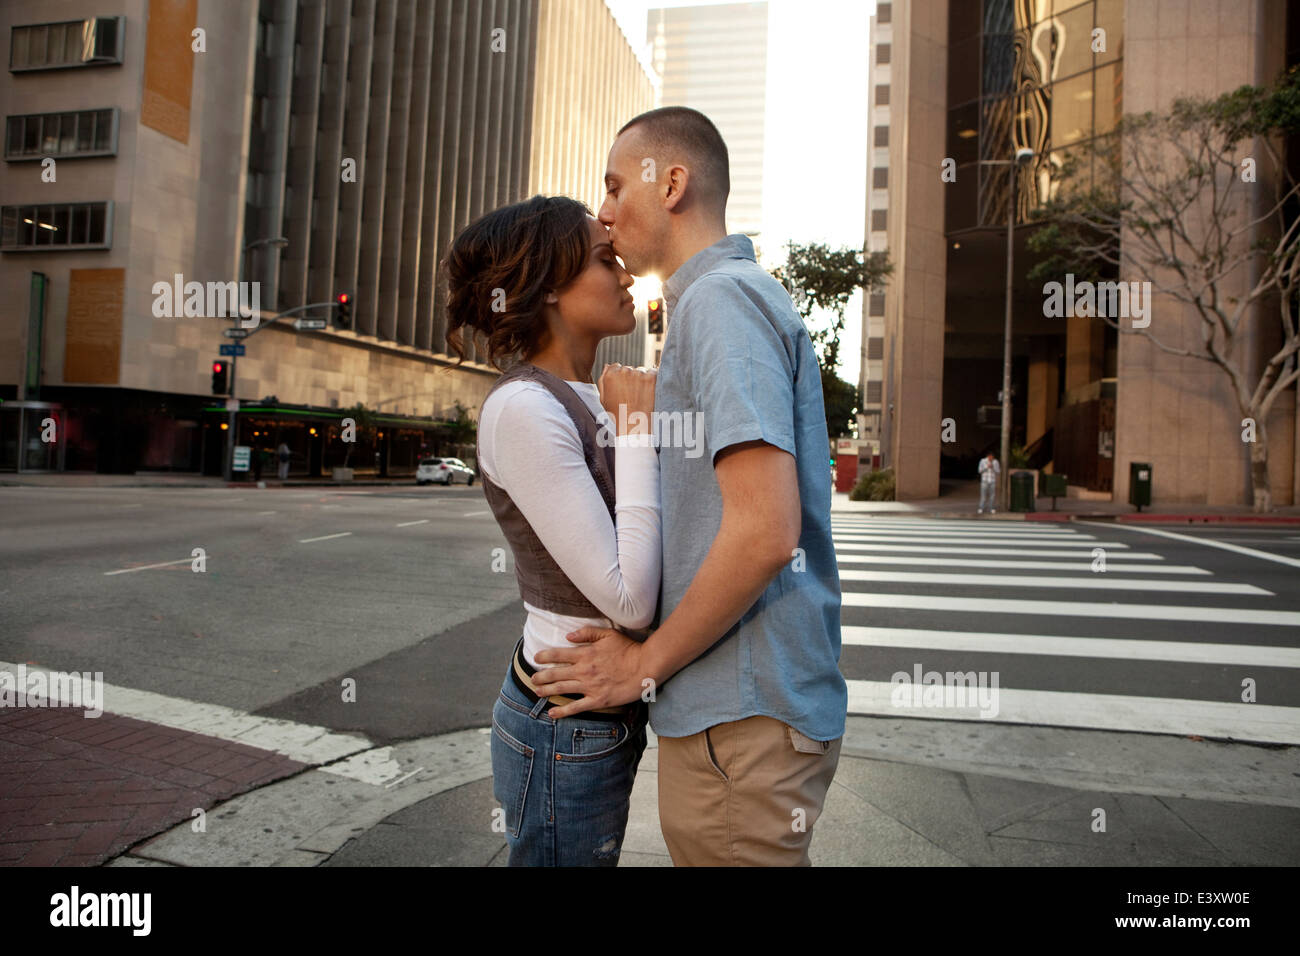 Couple kissing on city street Stock Photo